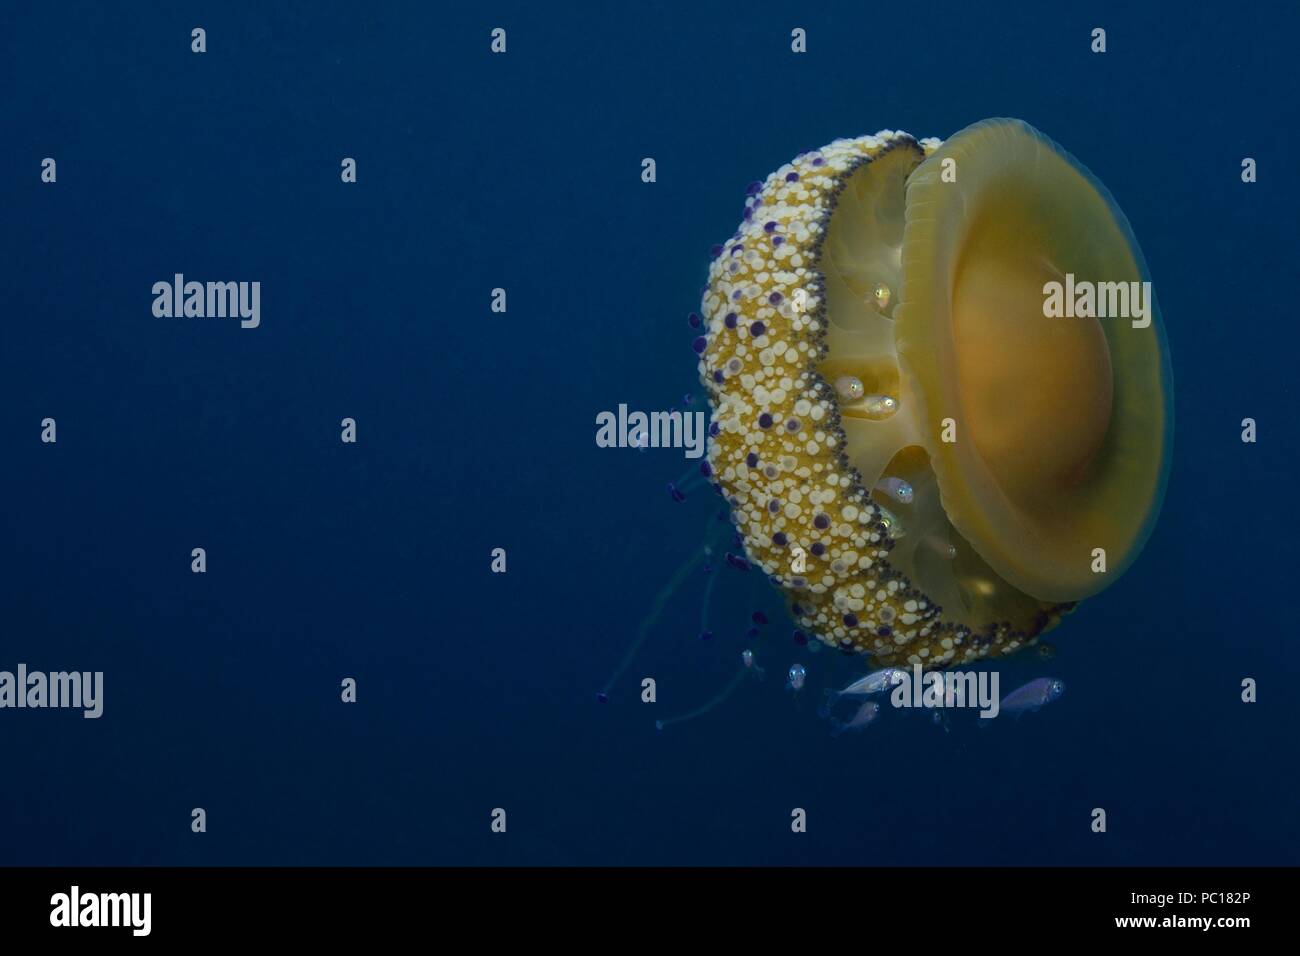 fried egg jellyfish, Spiegelei-Qualle, Cotylorhiza tuberculata, Symbiose mit juvenilen Trachurus sp., Tamariu, Costa Brava, mediterranean, Mittelmeer Stock Photo